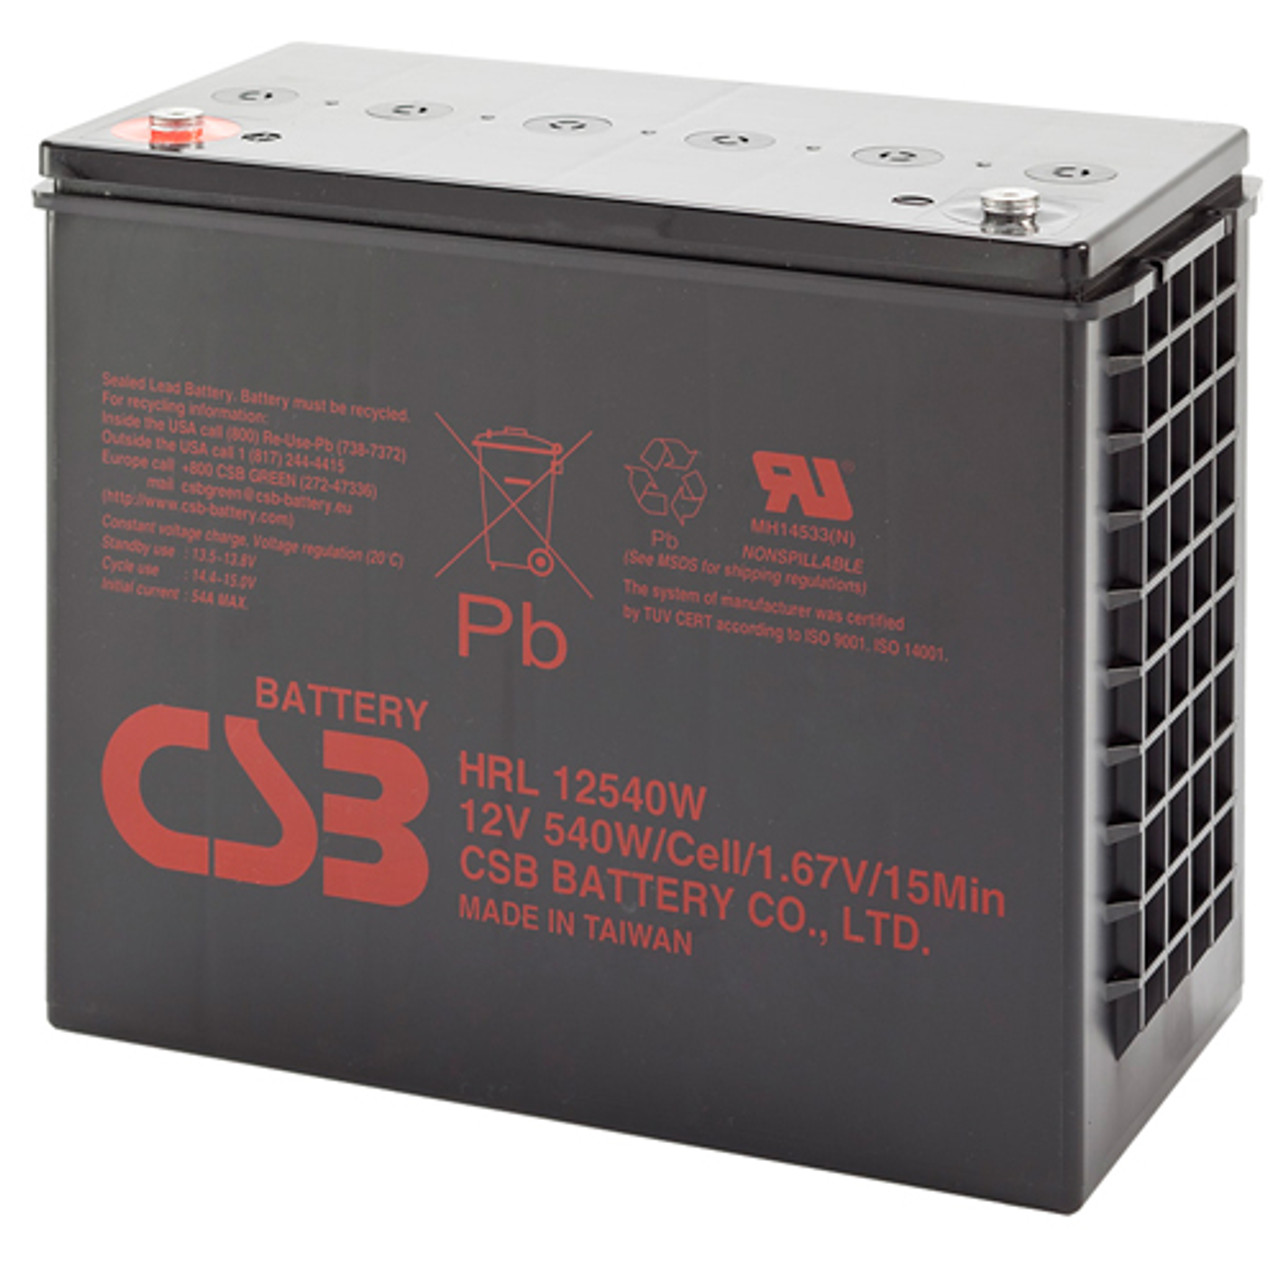 CSB HRL12540W 12V 540W Battery